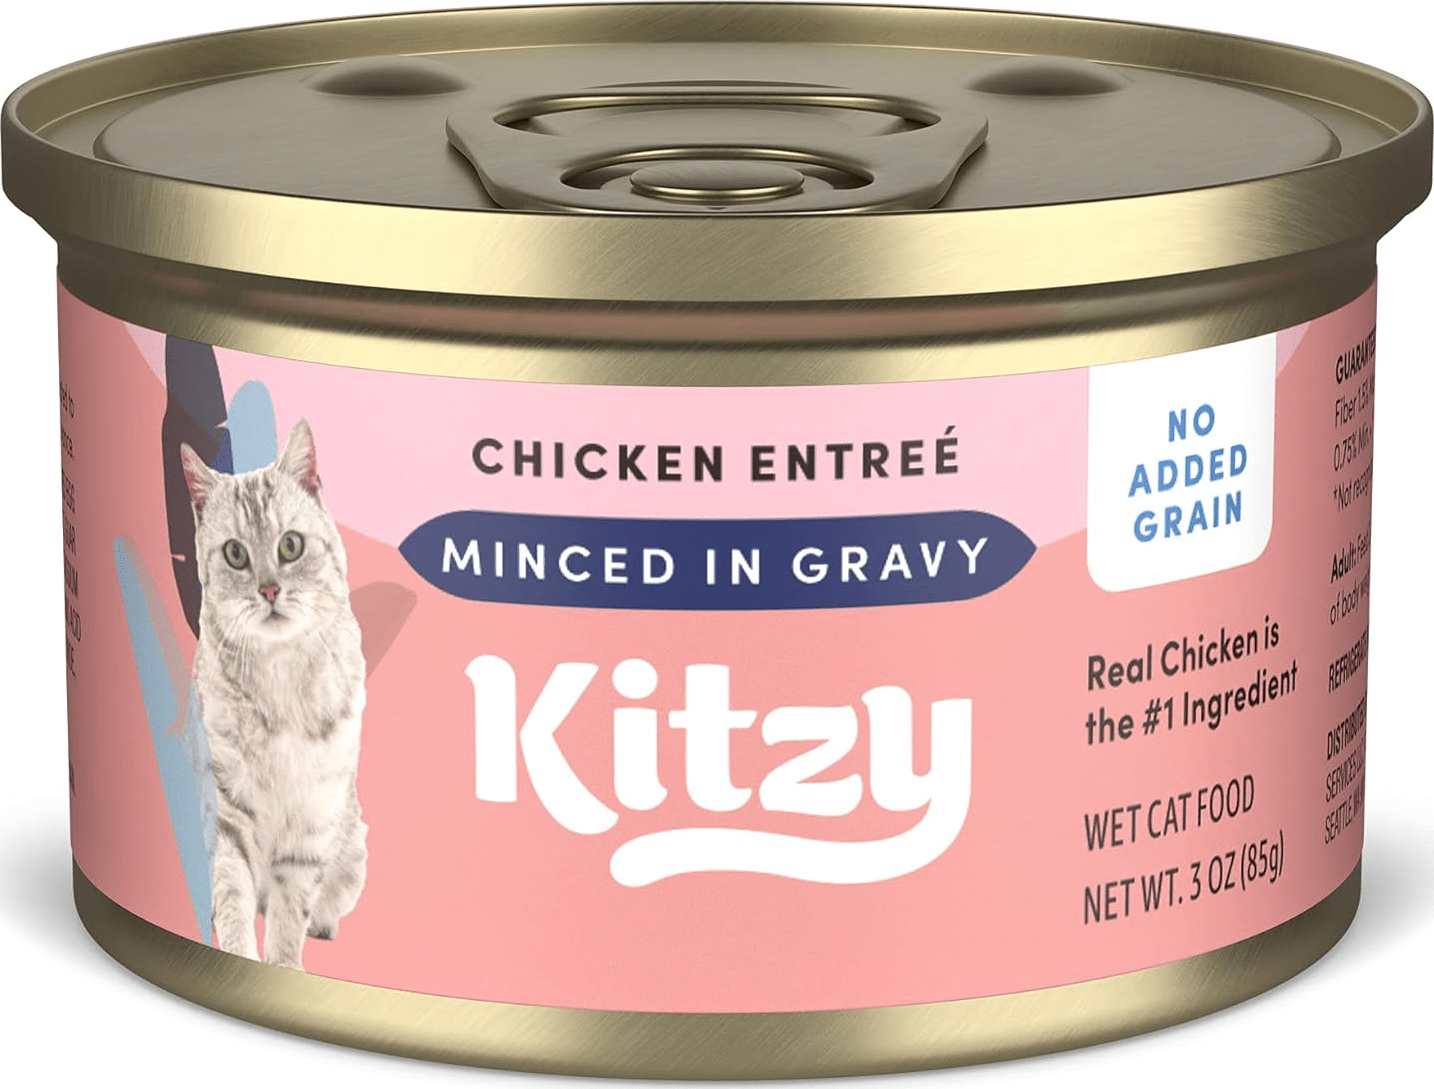 Kitzy Chicken Entree